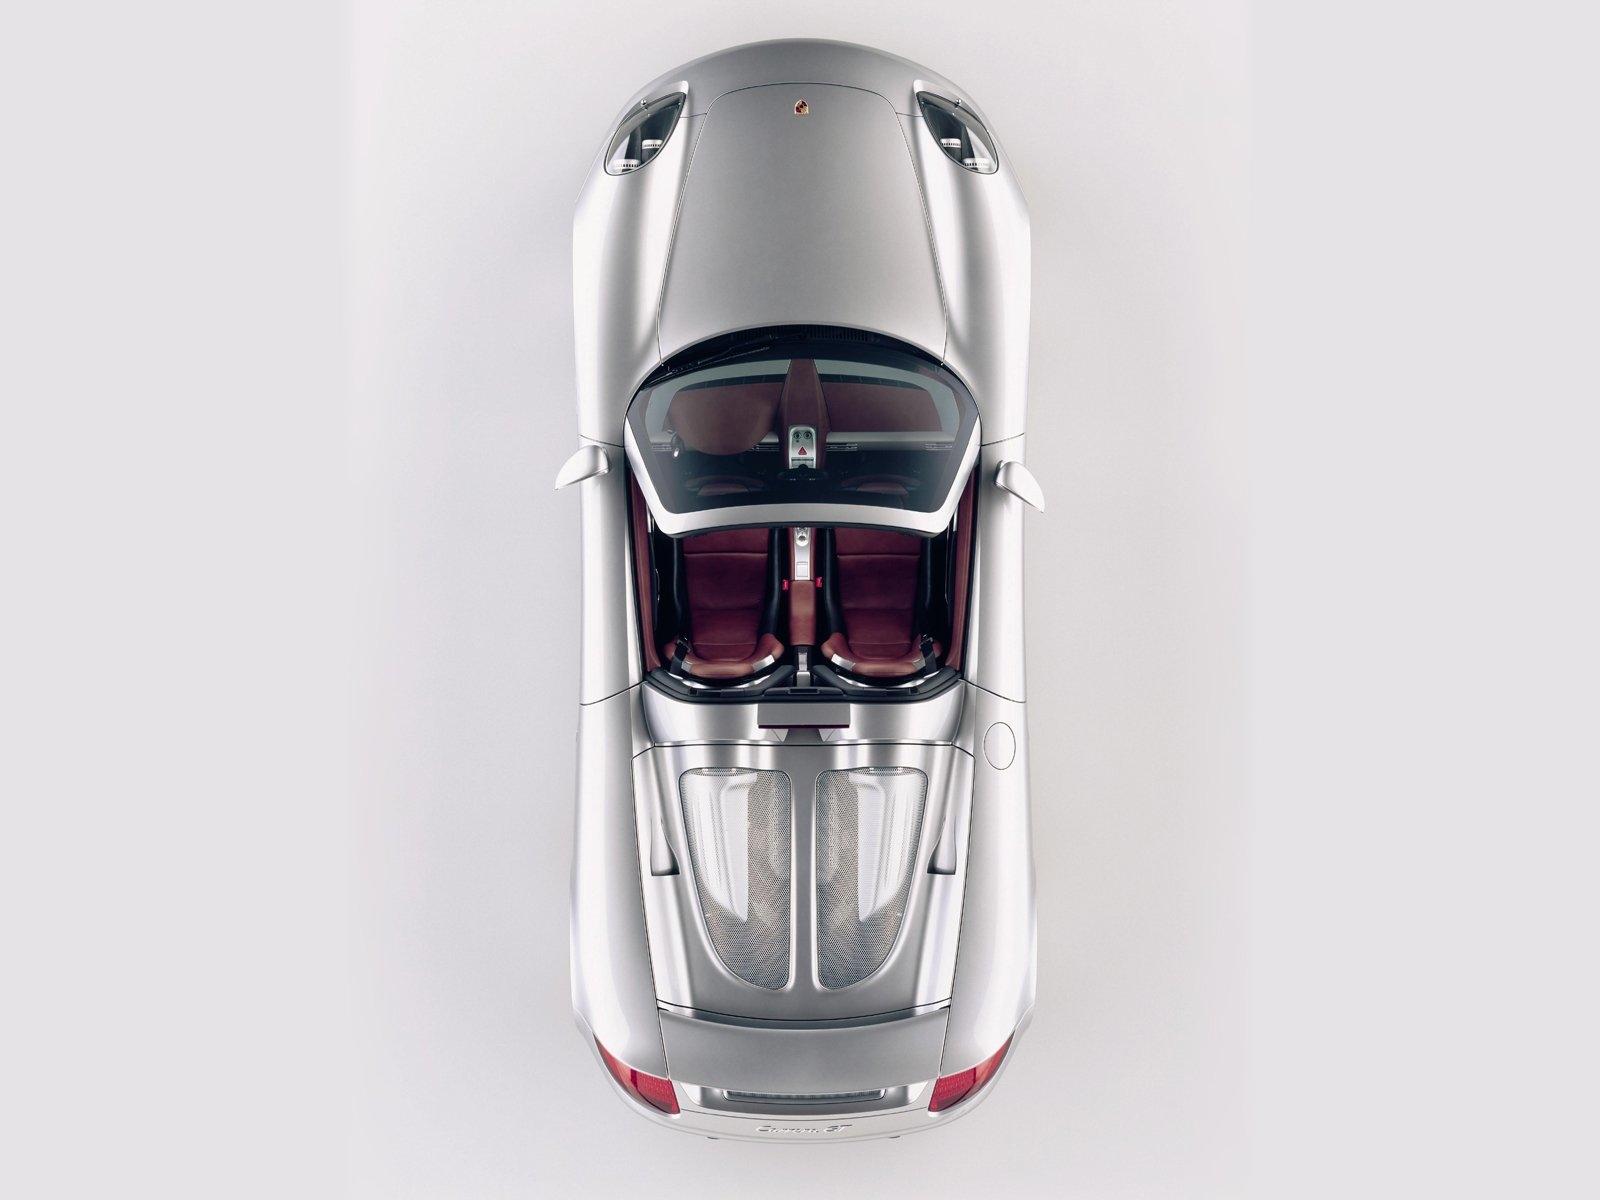 Porsche Carrera GT at 1024 x 1024 iPad size wallpapers HD quality